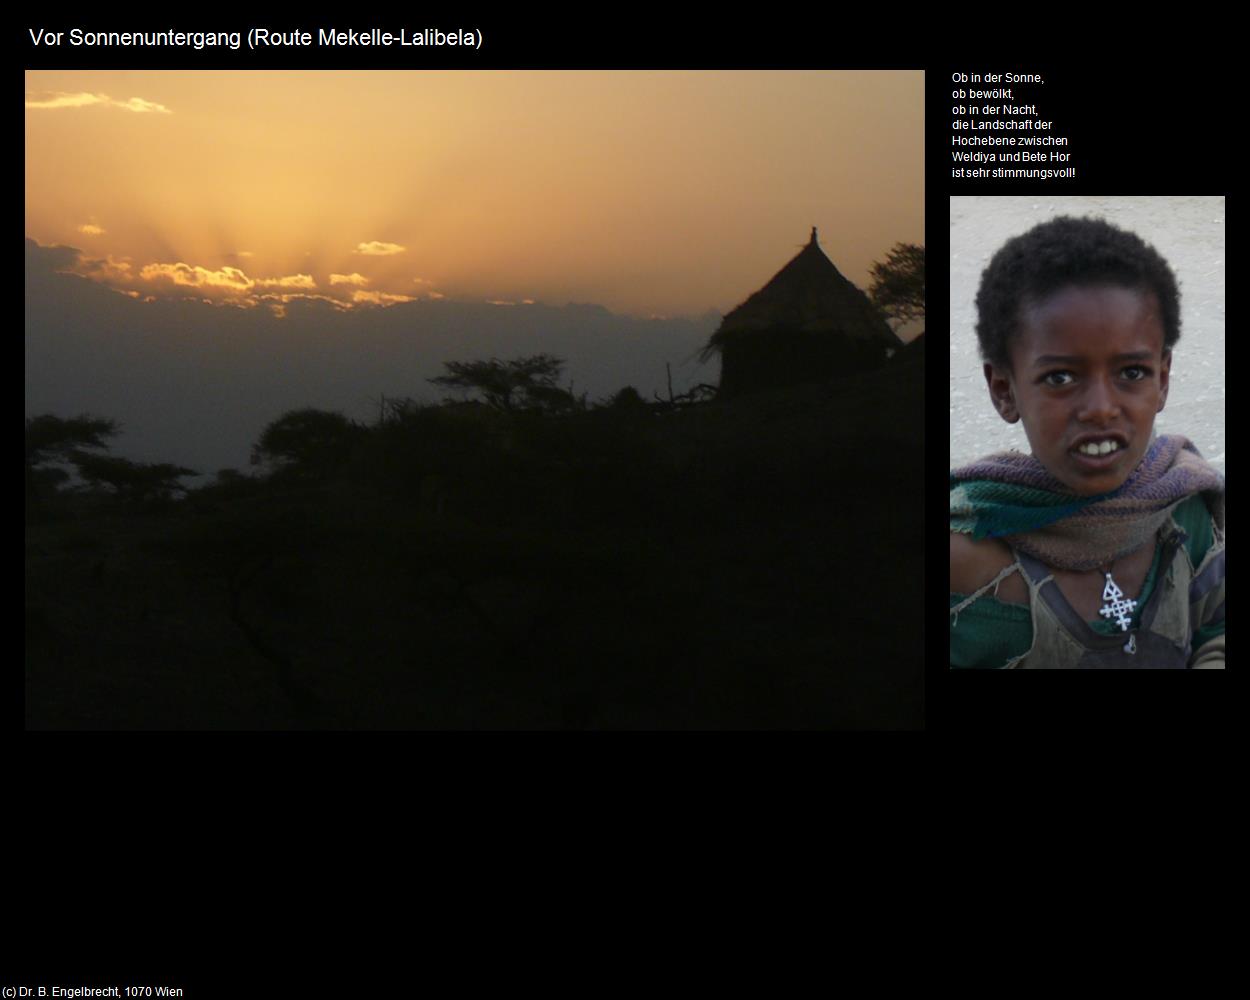 Vor Sonnenuntergang (Route Mekelle-Lalibela) in Äthiopien